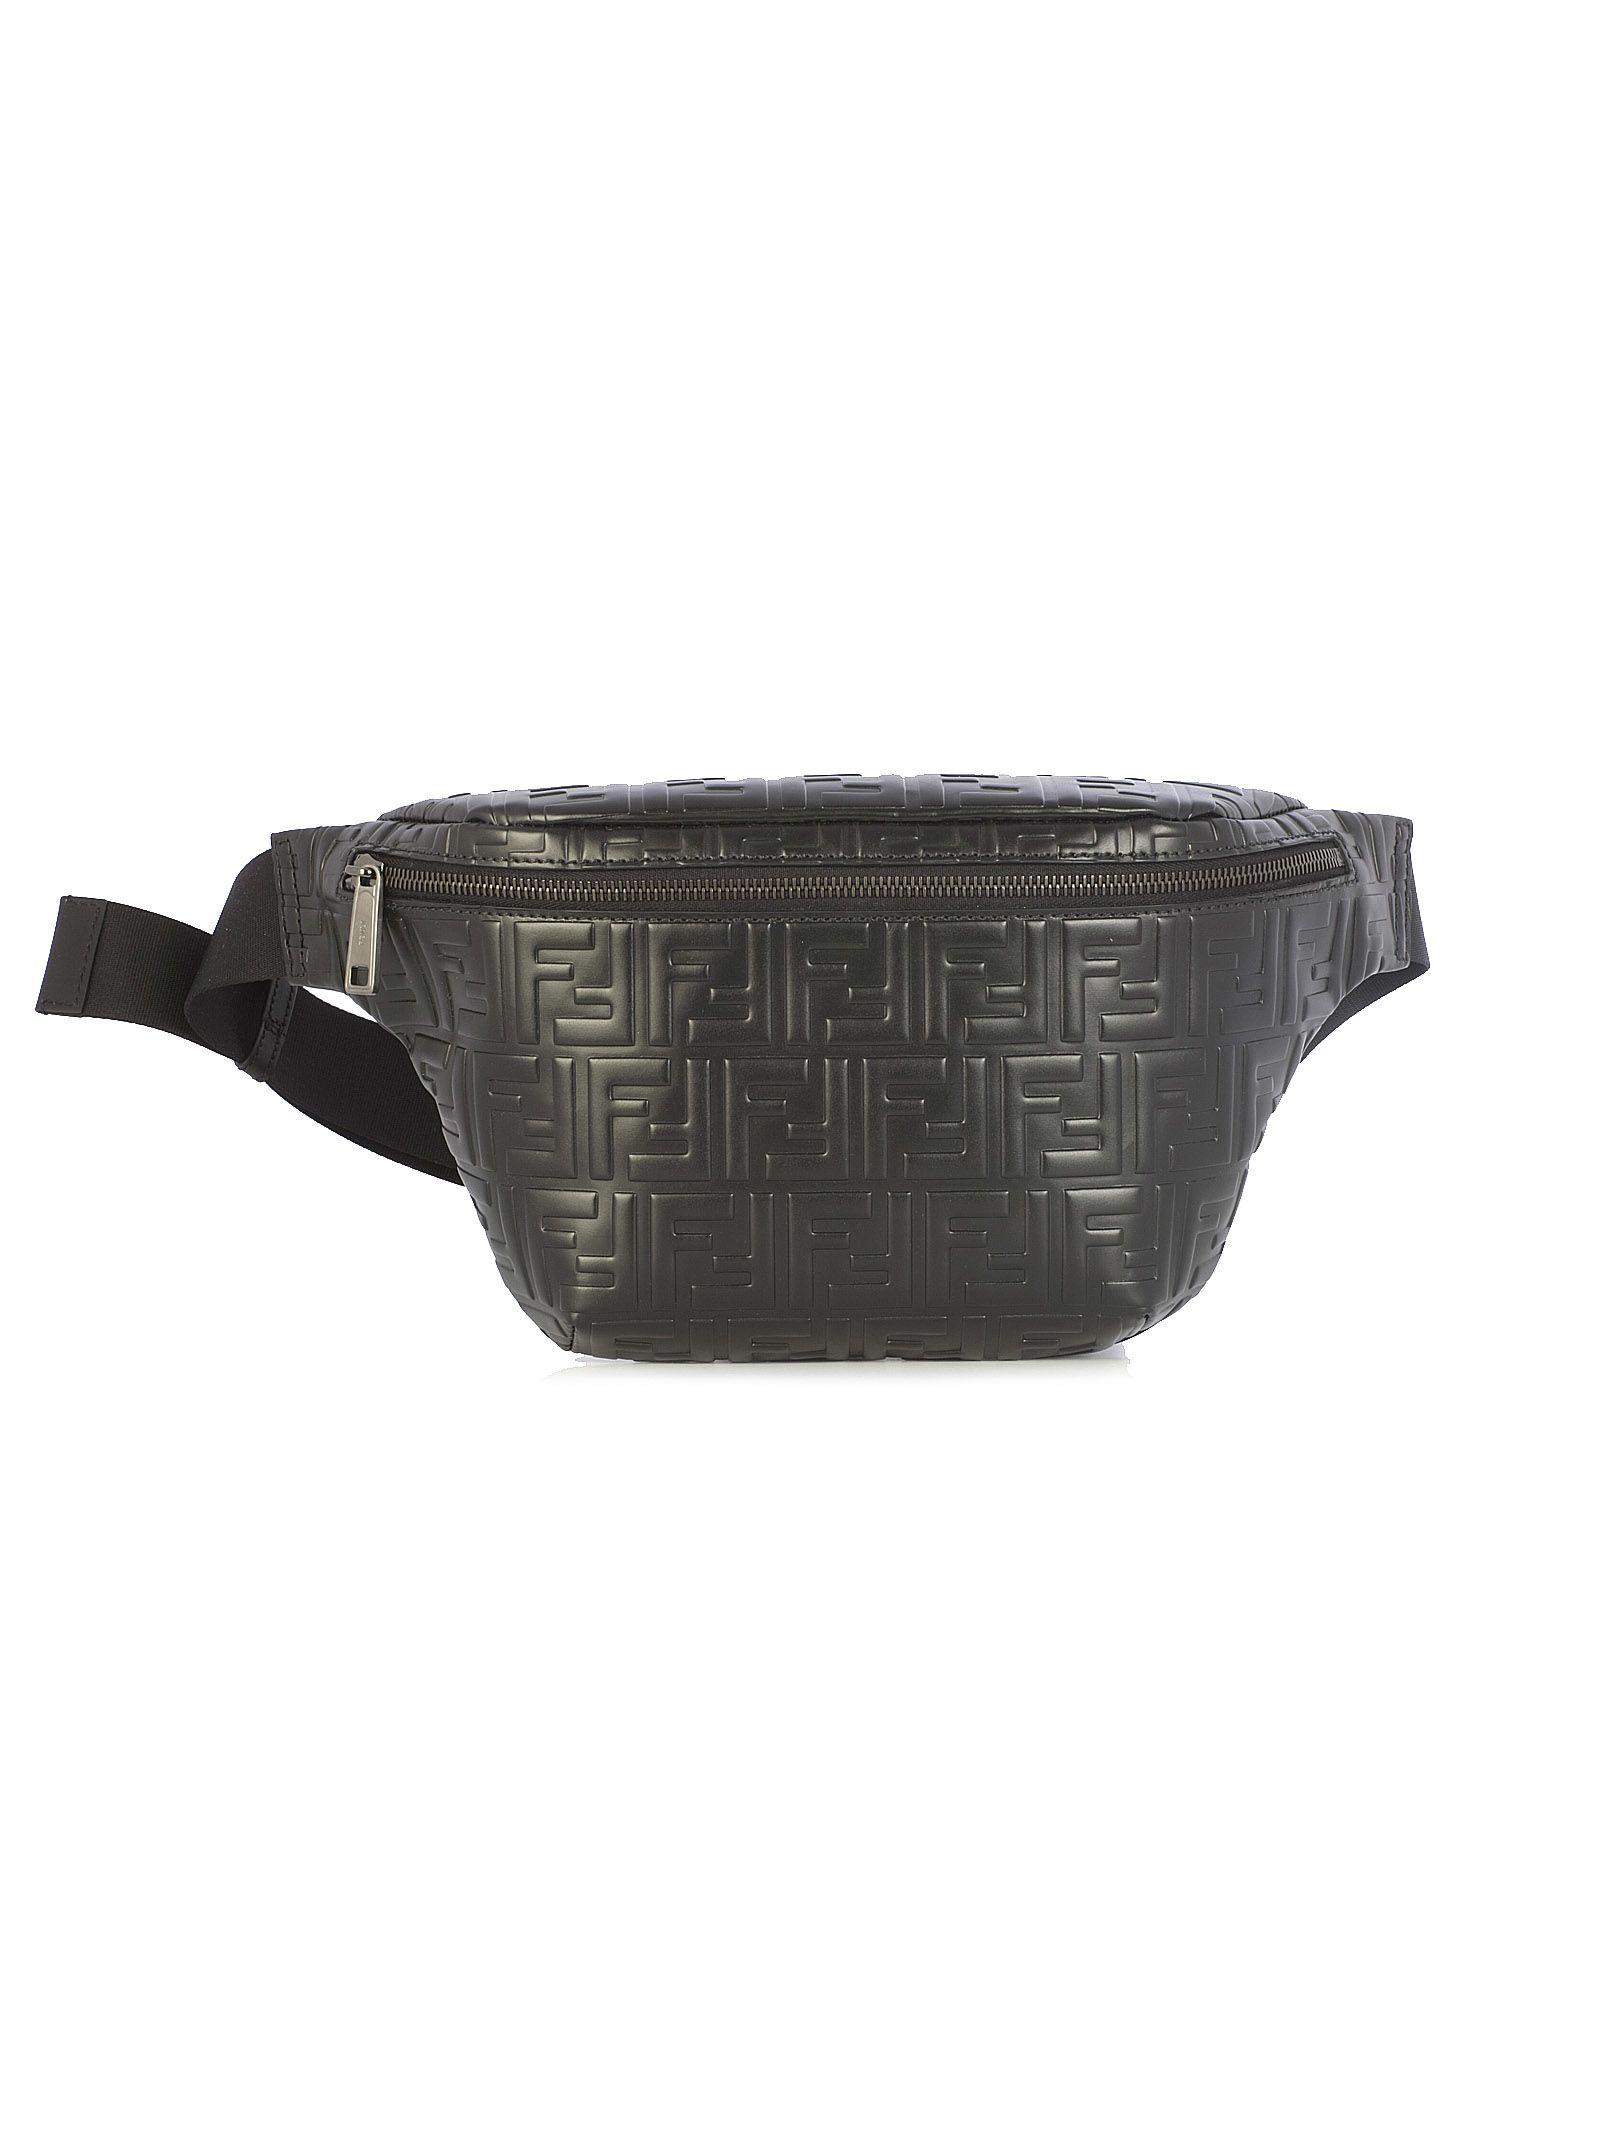 Fendi Logo Monogram Belt Bag In F0saj Black Rutenio | ModeSens